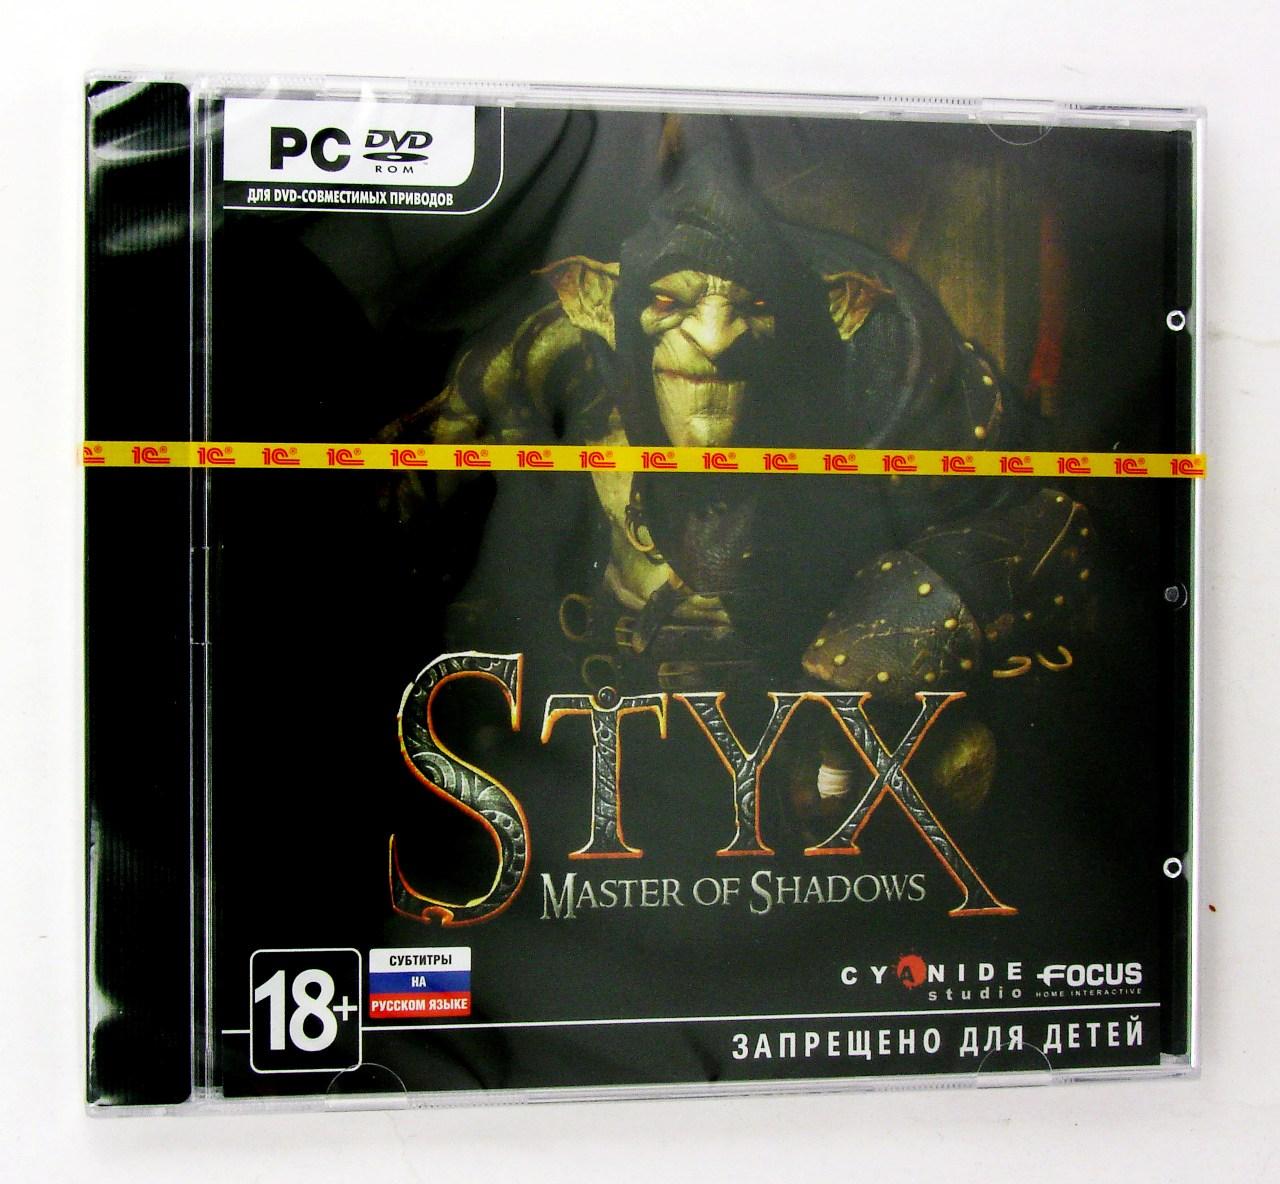  - Styx: Master of Shadows (PC), "1-", DVD